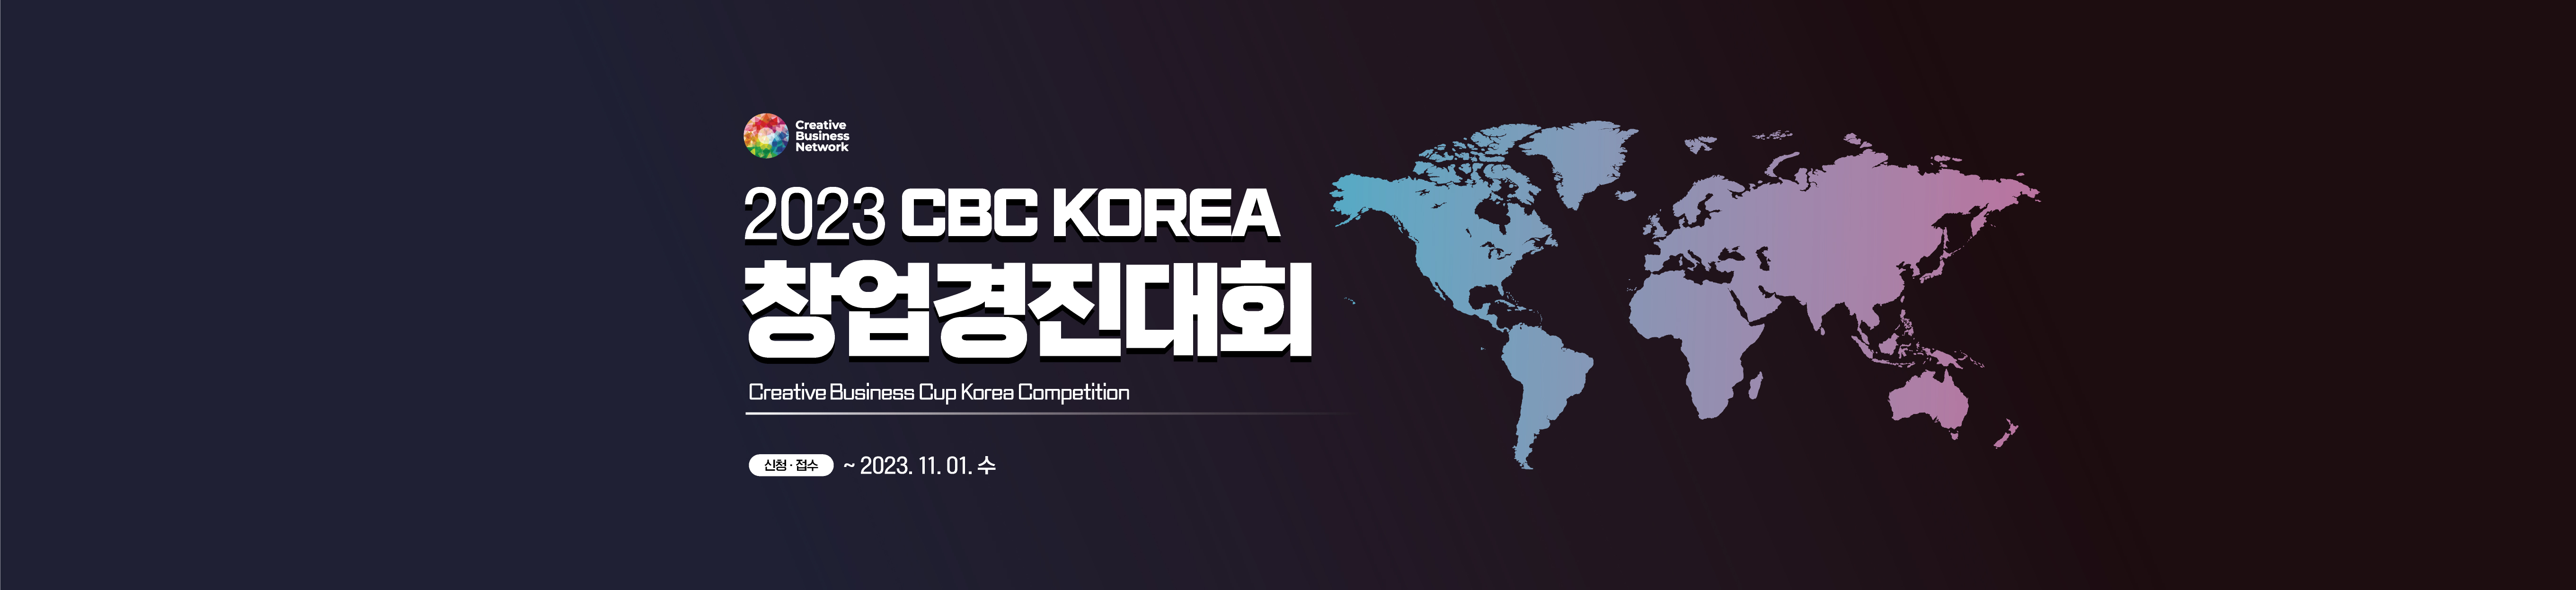 2023 CBC KOREA 창업경진대회